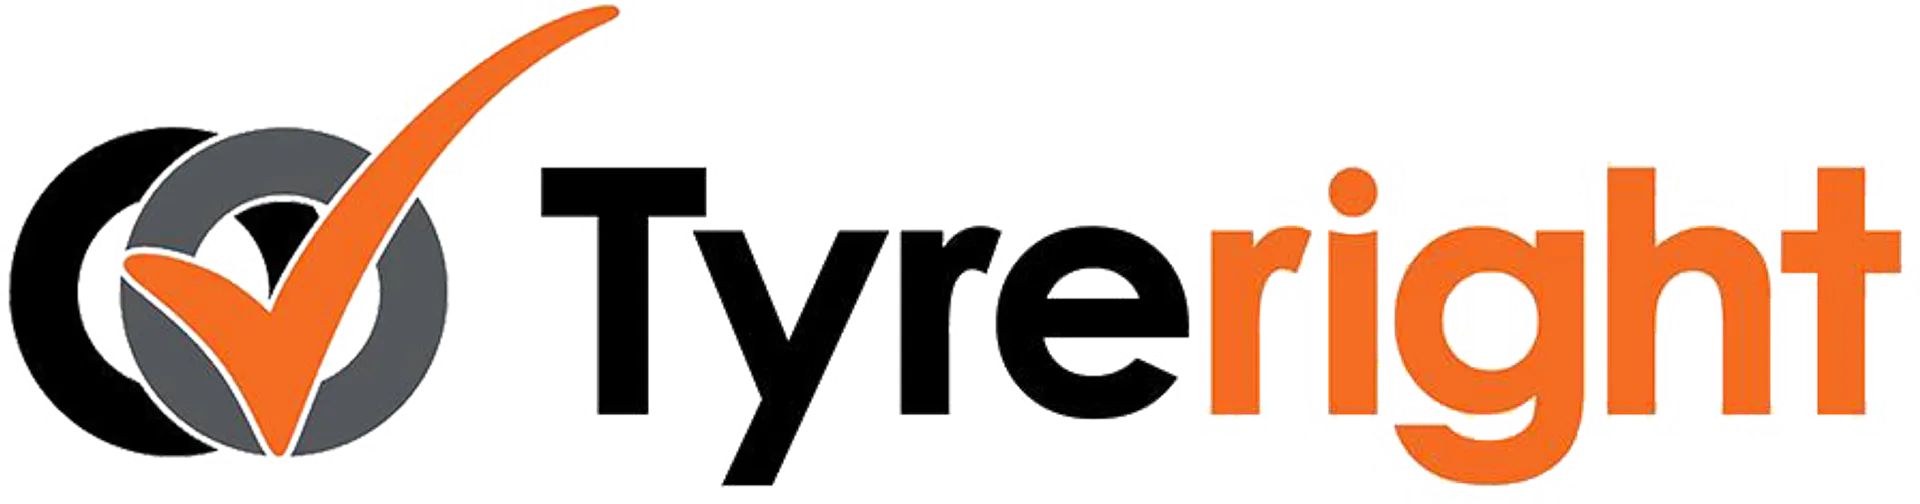 TYRERIGHT logo